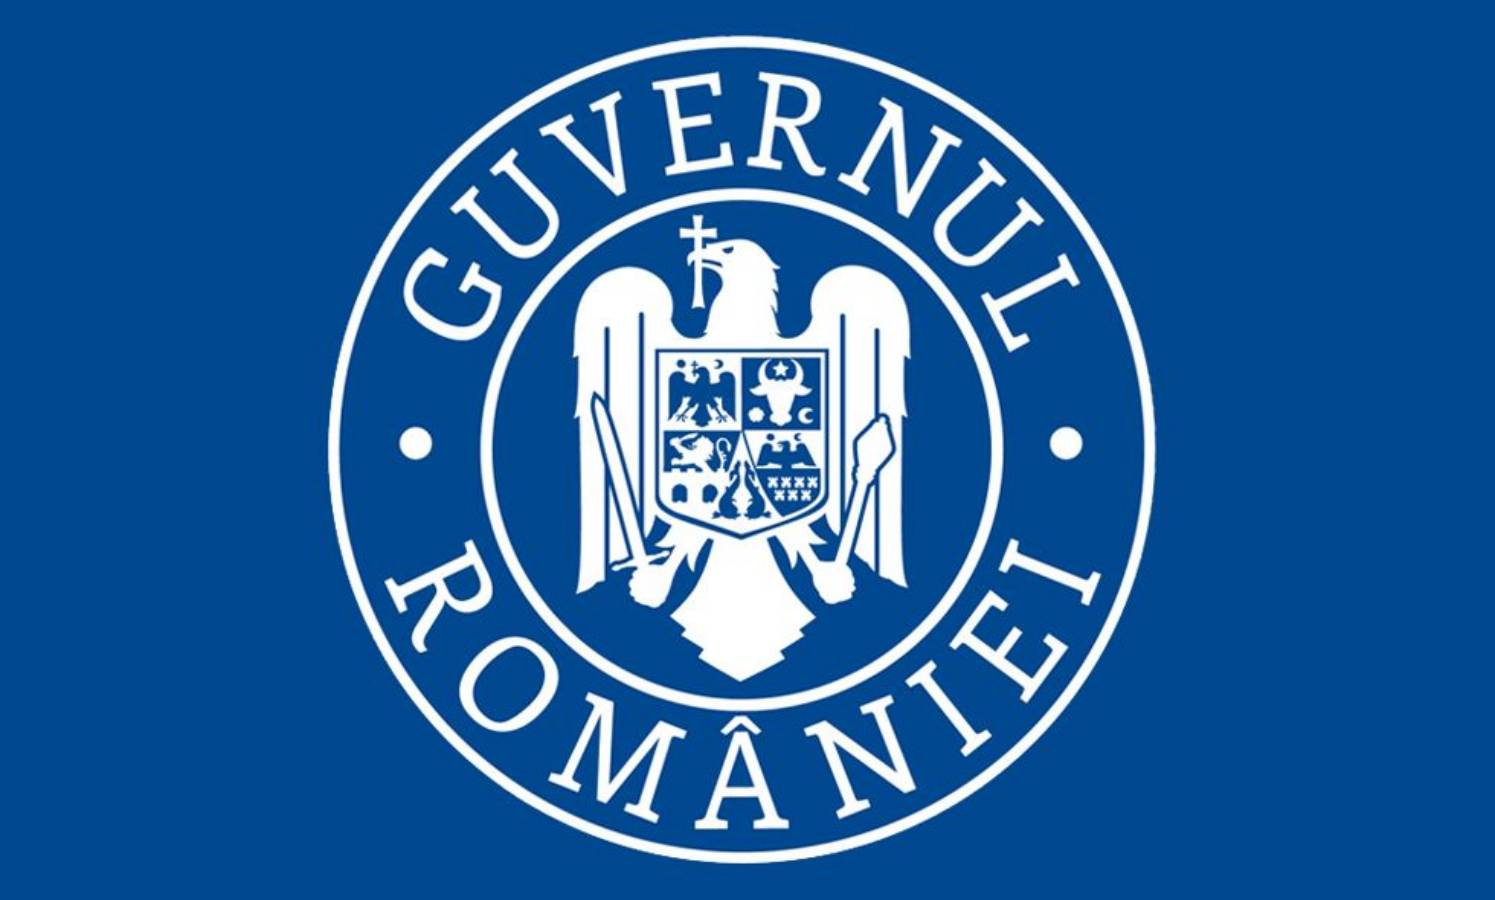 Roemeense regering 108.294 Roemenen ingeënt tegen coronavirus